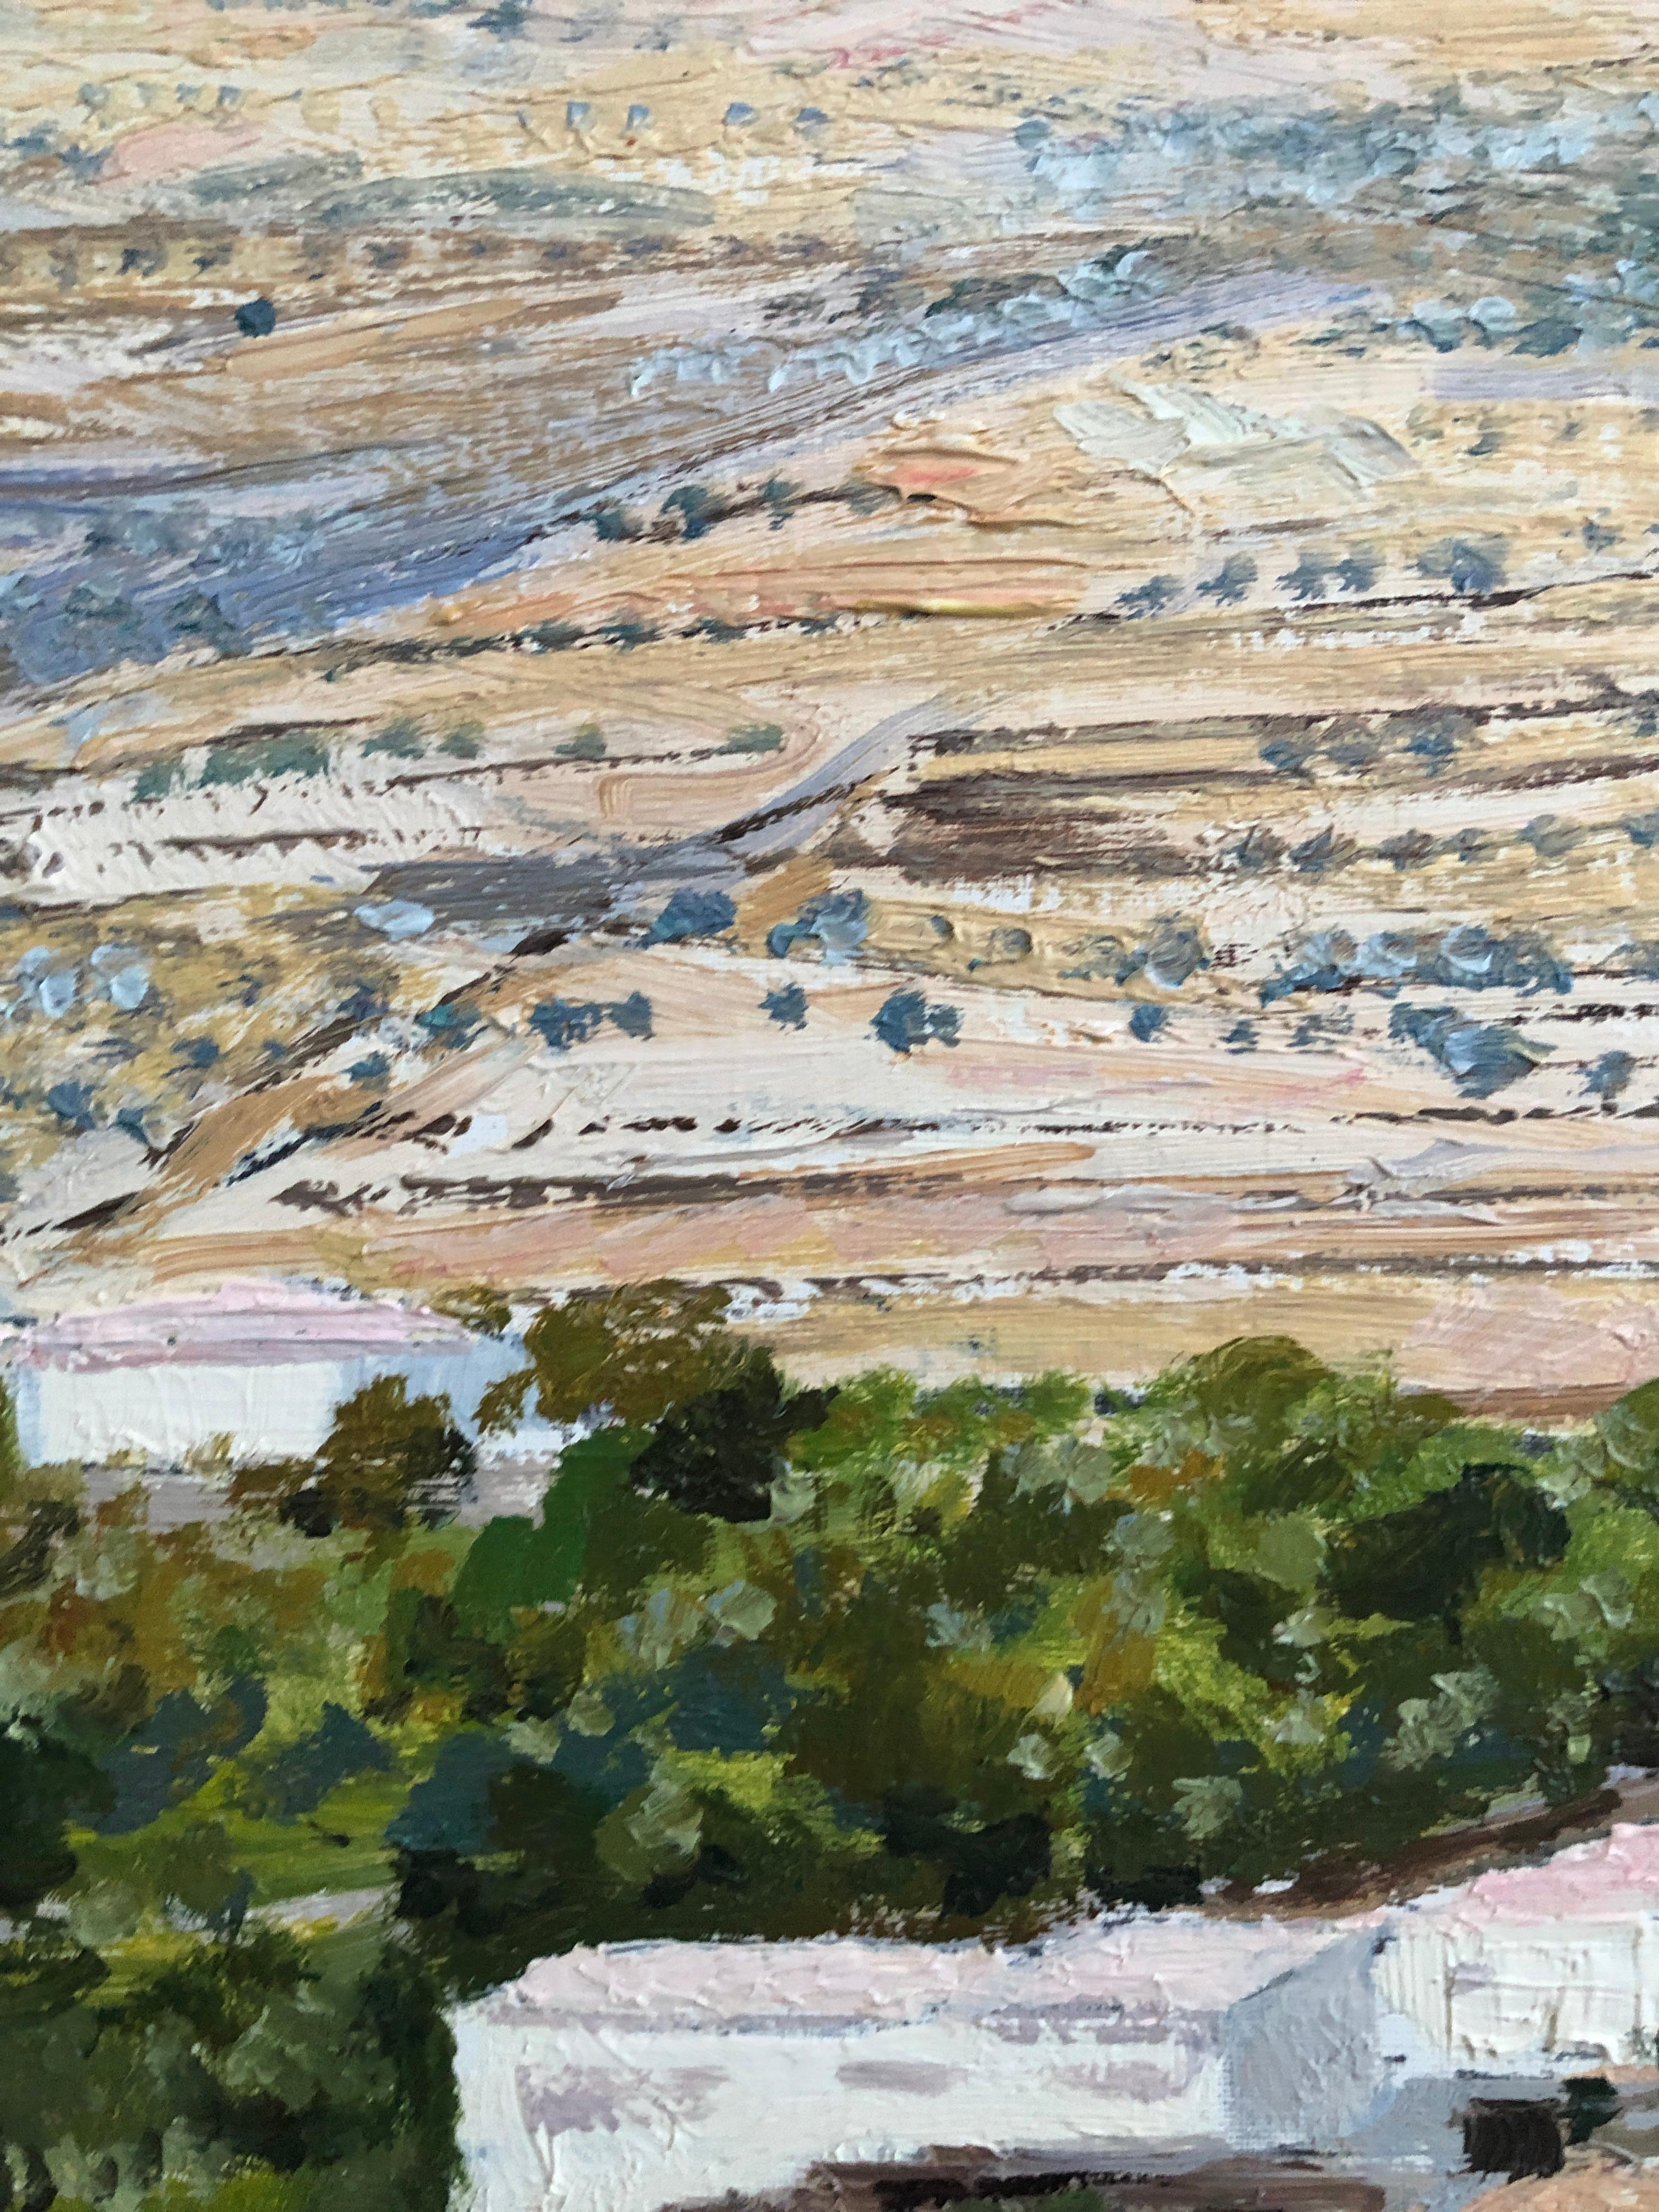 Roofs of Cadaqués Spain oil on canvas painting seascape - Gray Landscape Painting by Jordi Pagans Montsalvatje